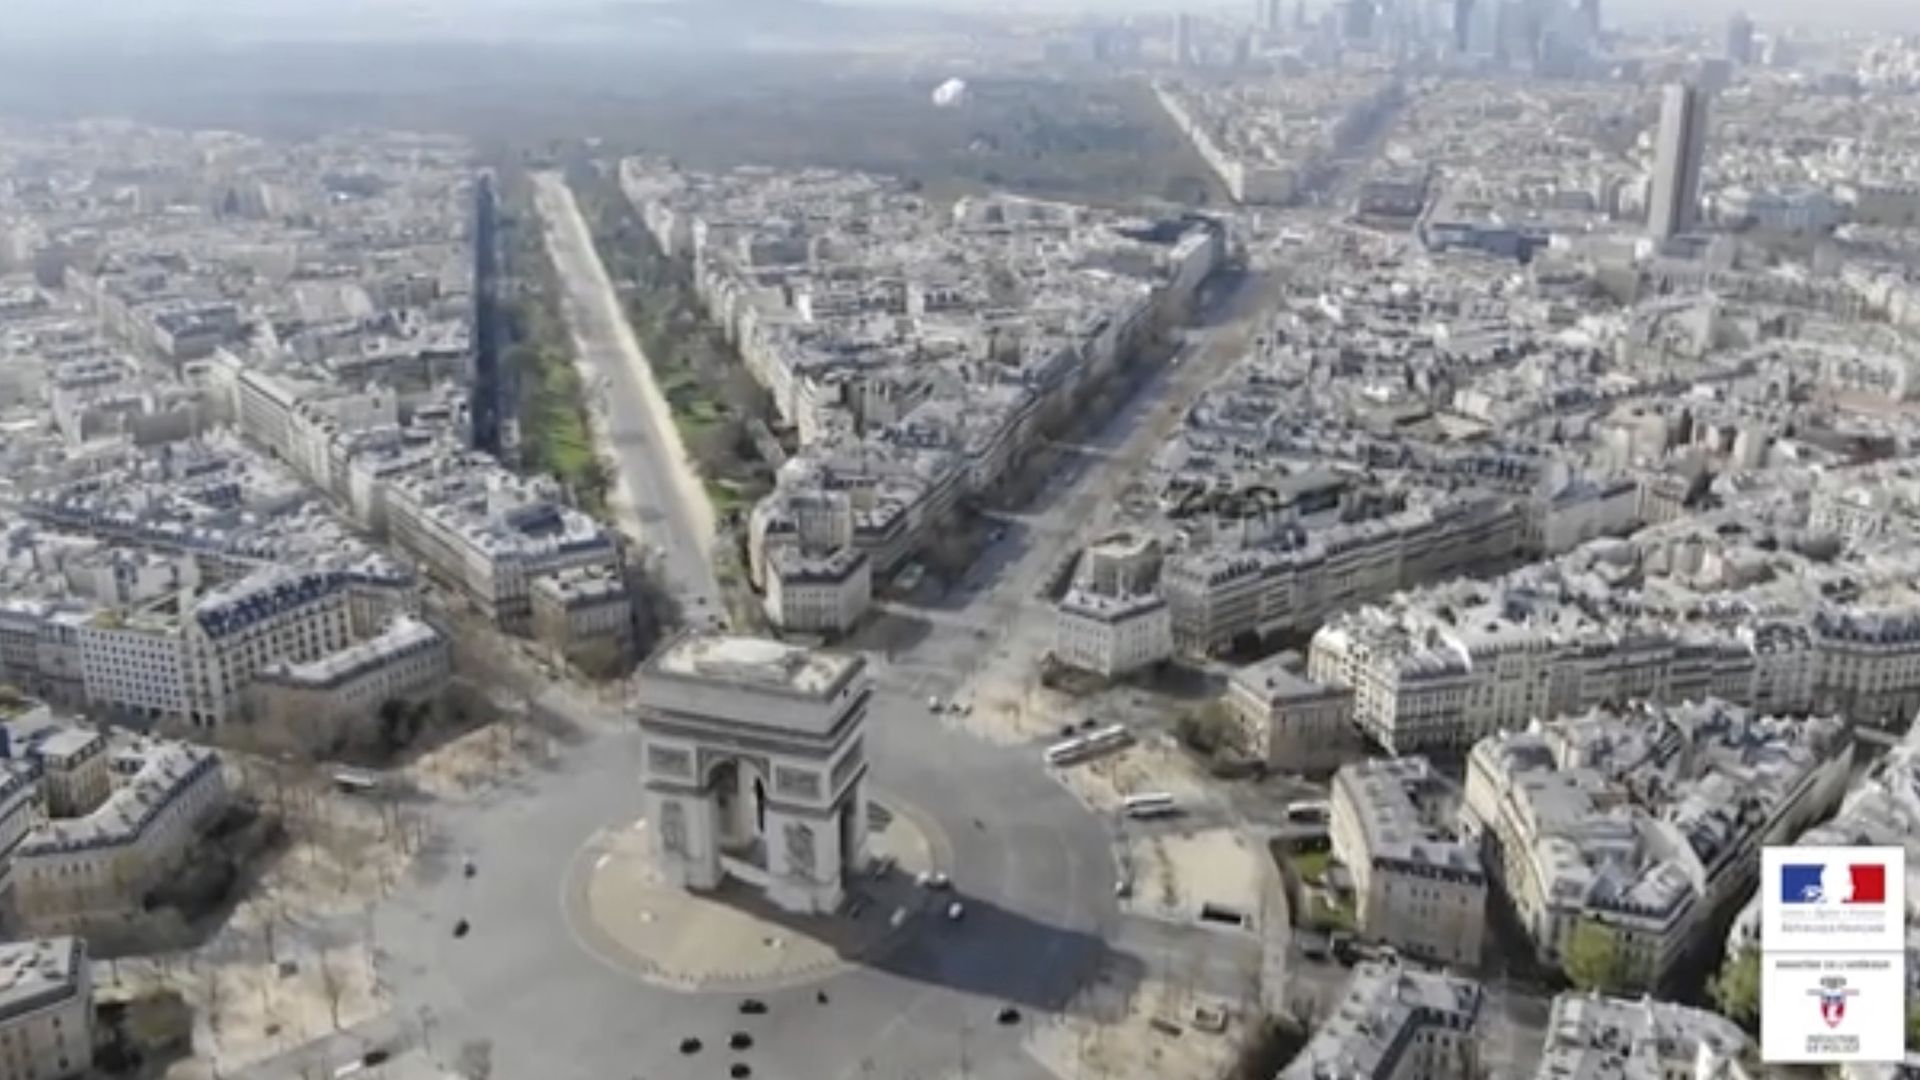 A photo shows the empty streets of Paris around the Arc de Triomphe